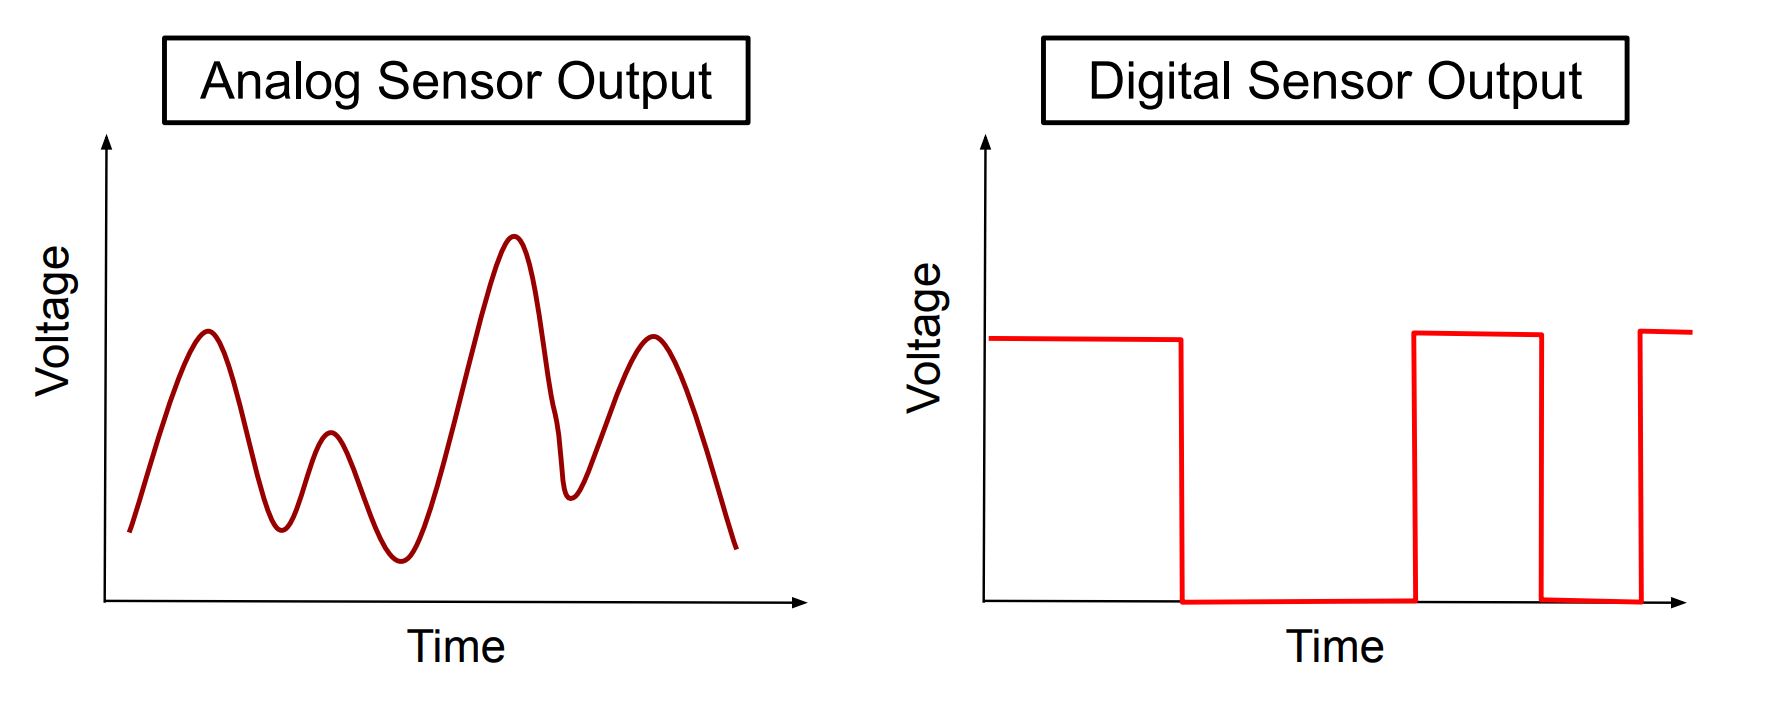 This image shows analog and digital sensor output comparison.